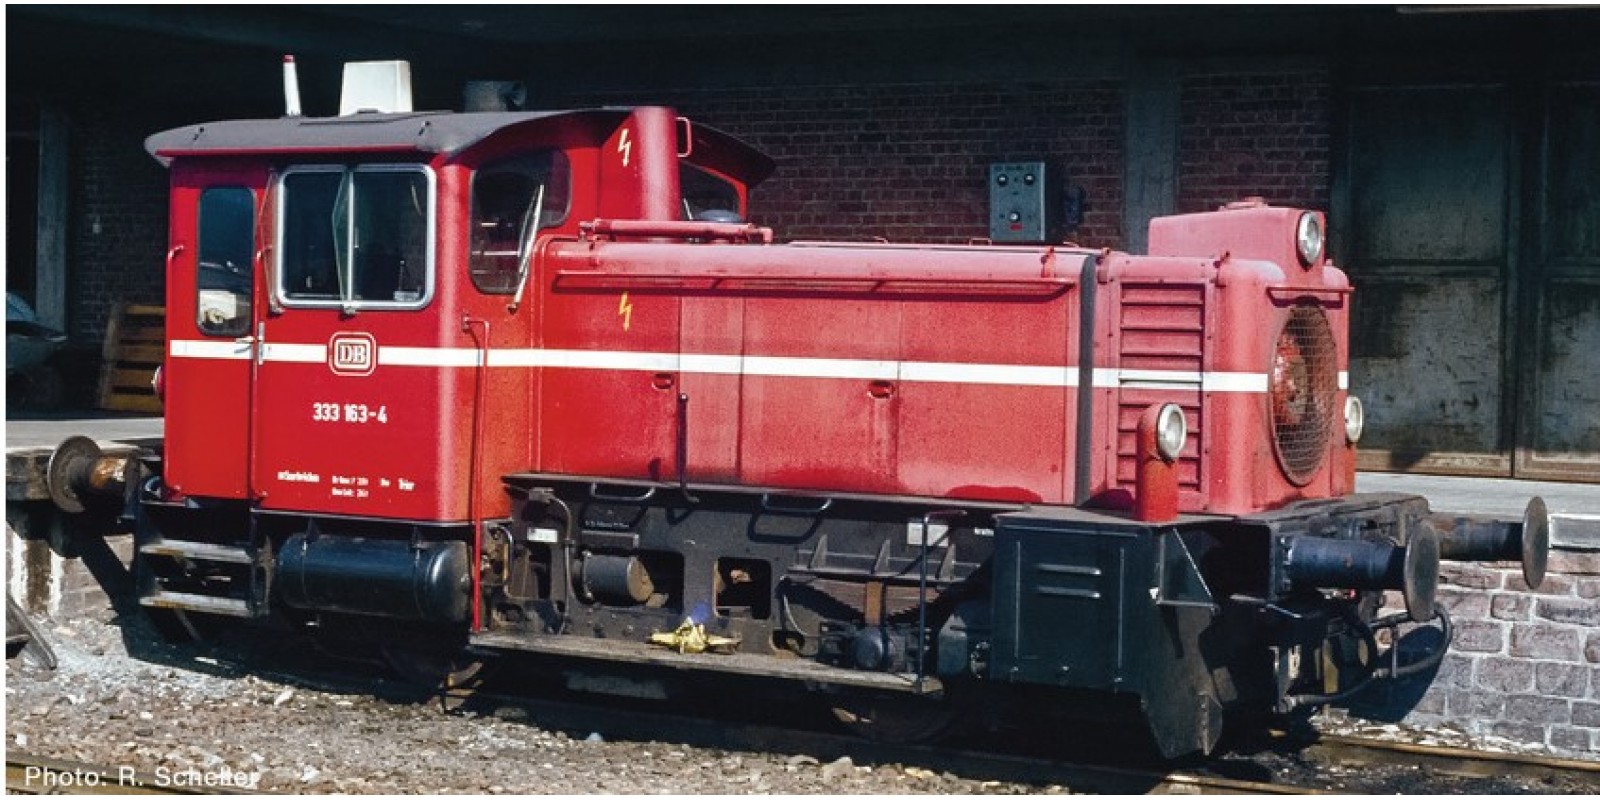 RO78016 - Diesel locomotive class 333, DB